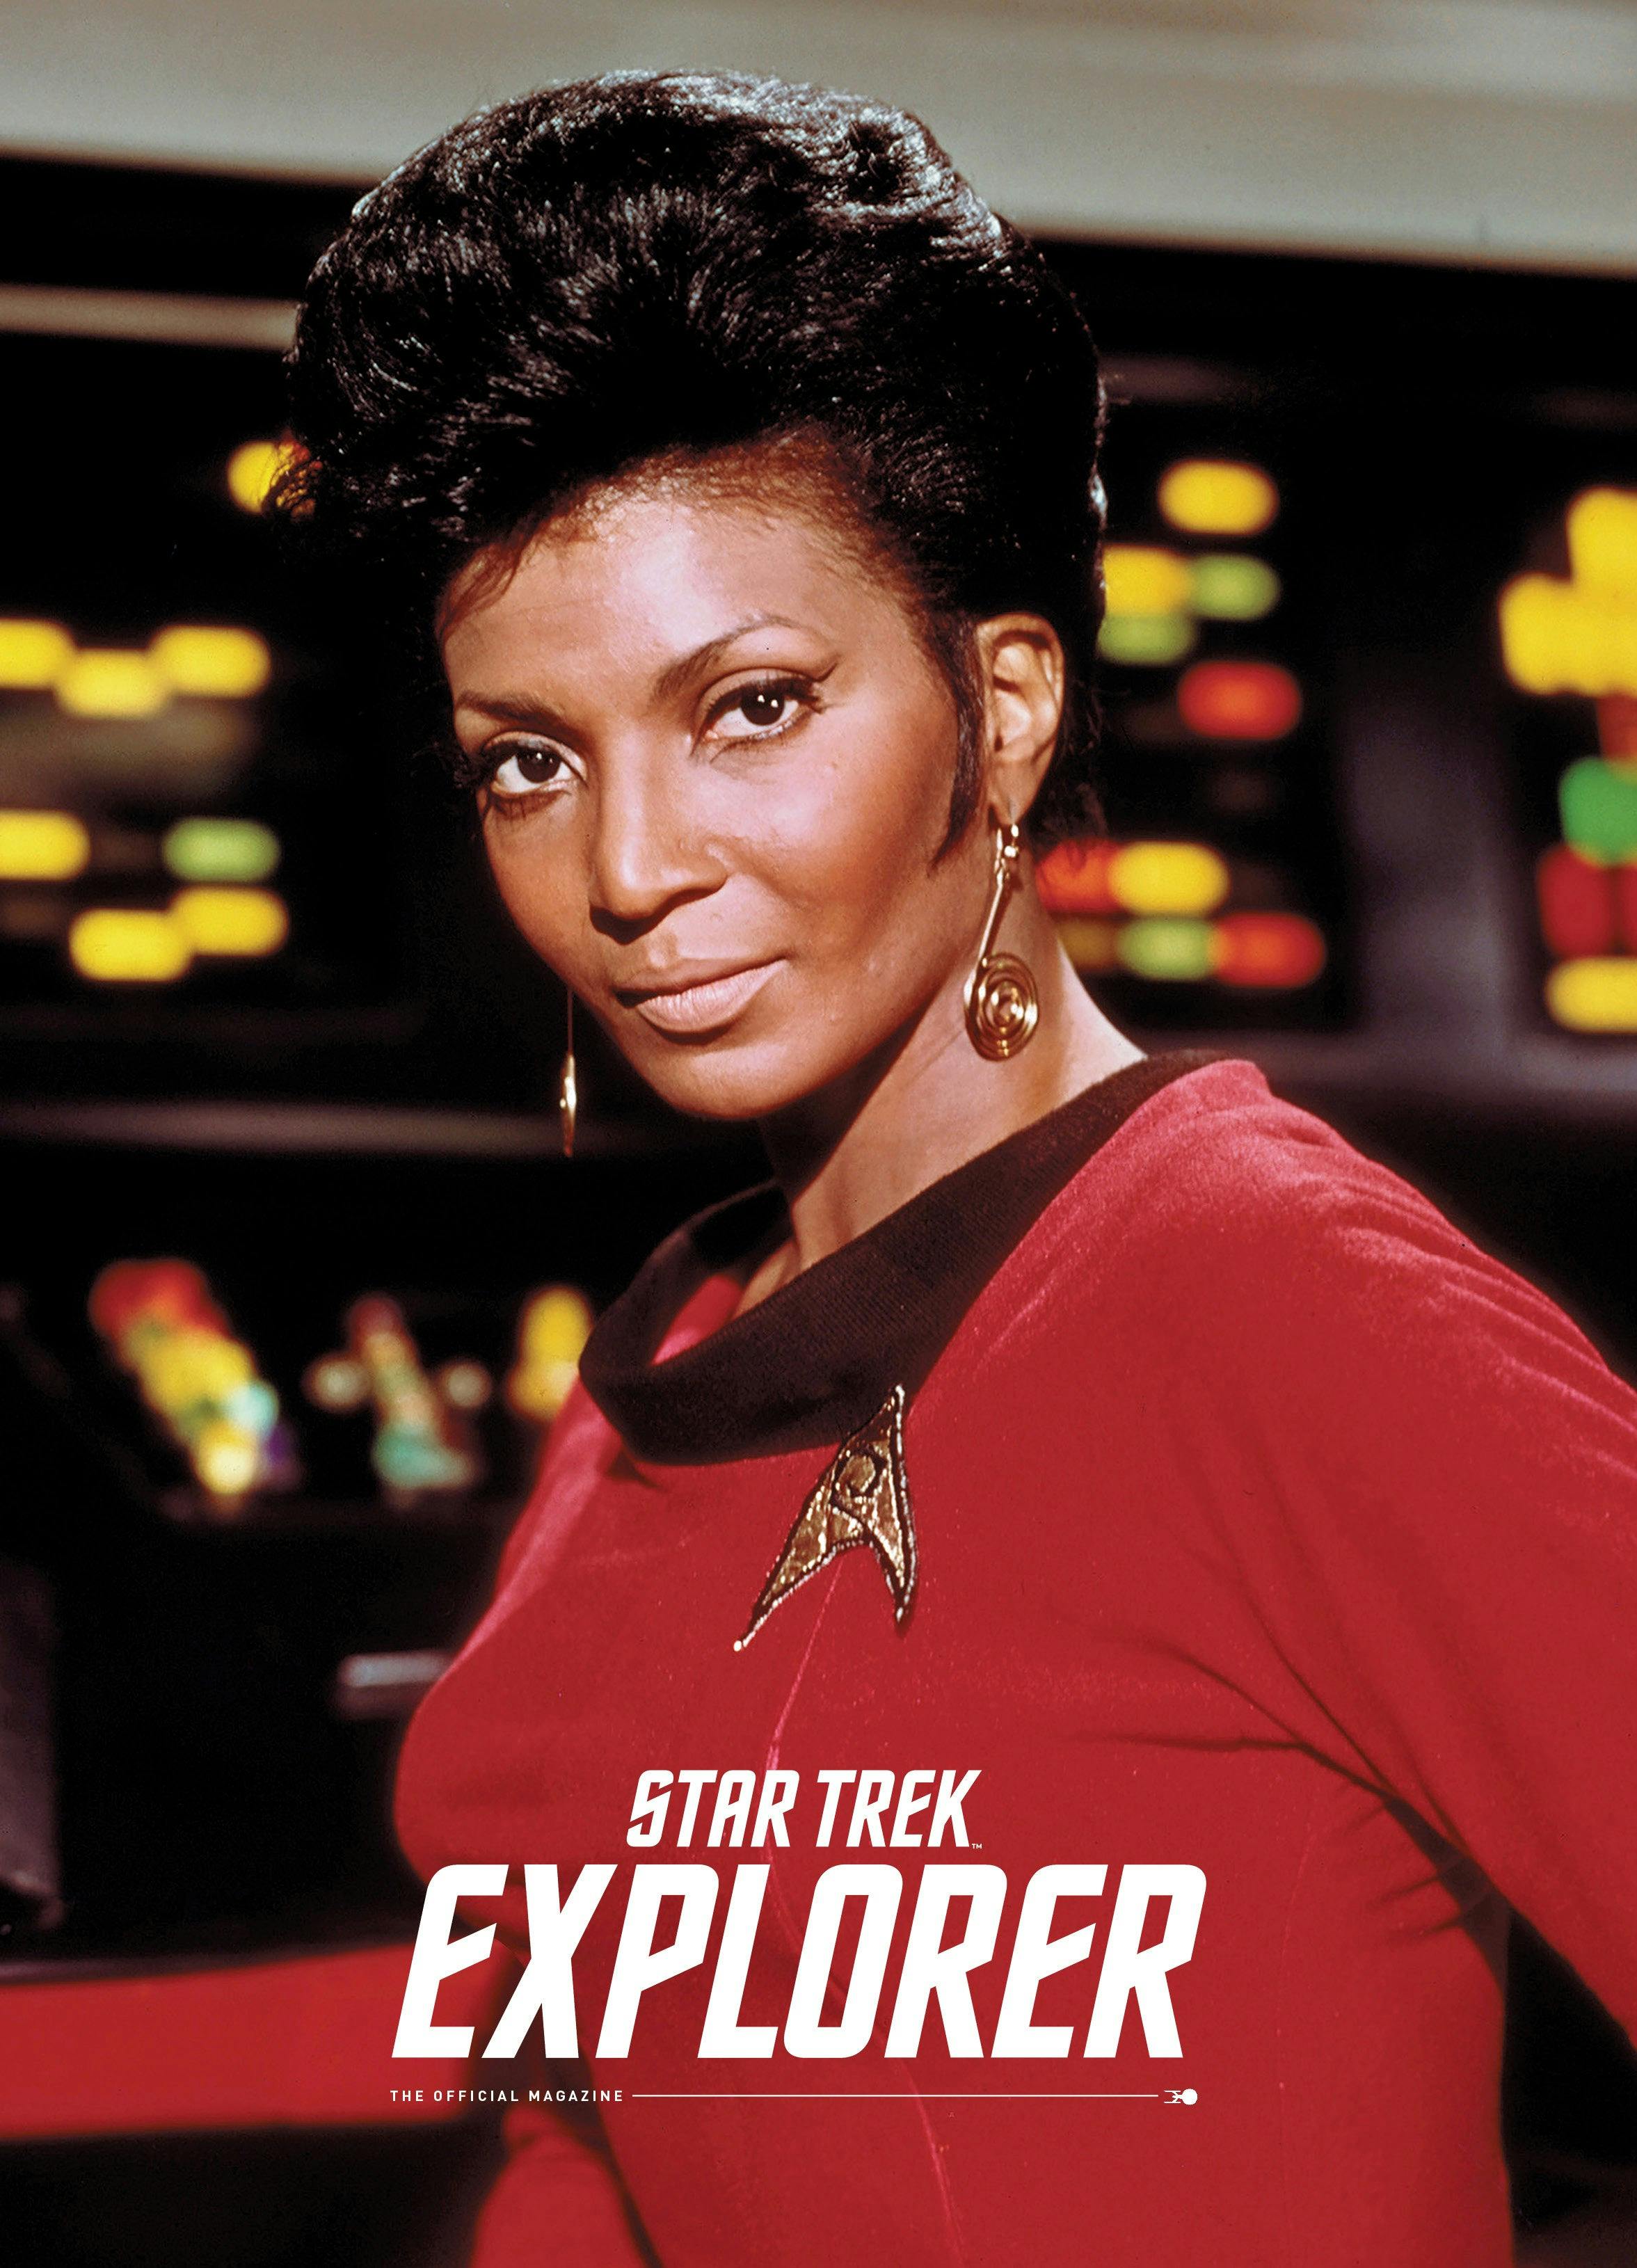 Star Trek Explorer #5 Exclusive Cover Featuring Nichelle Nichols